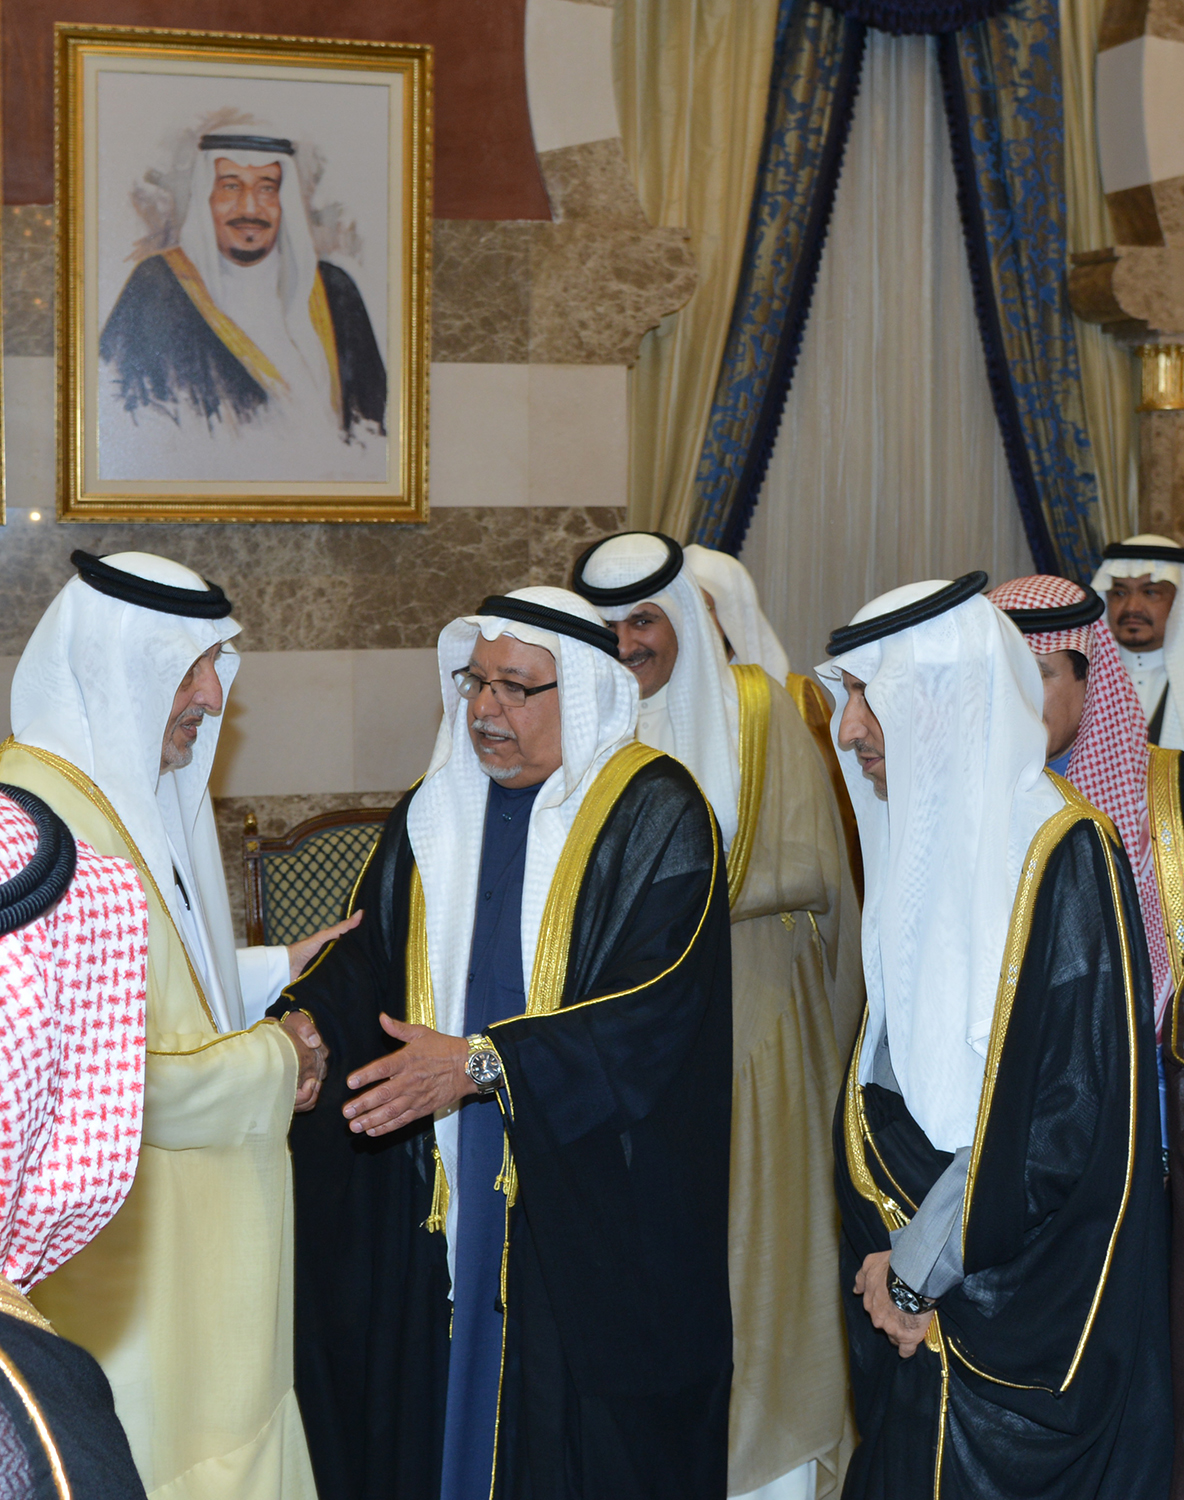 His Highness the Amir Sheikh Sabah Al-Ahmad Al-Jaber Al-Sabah's Representative, Deputy Minister of Amiri Diwan Sheikh Ali Jarrah Al-Sabah offers condolences